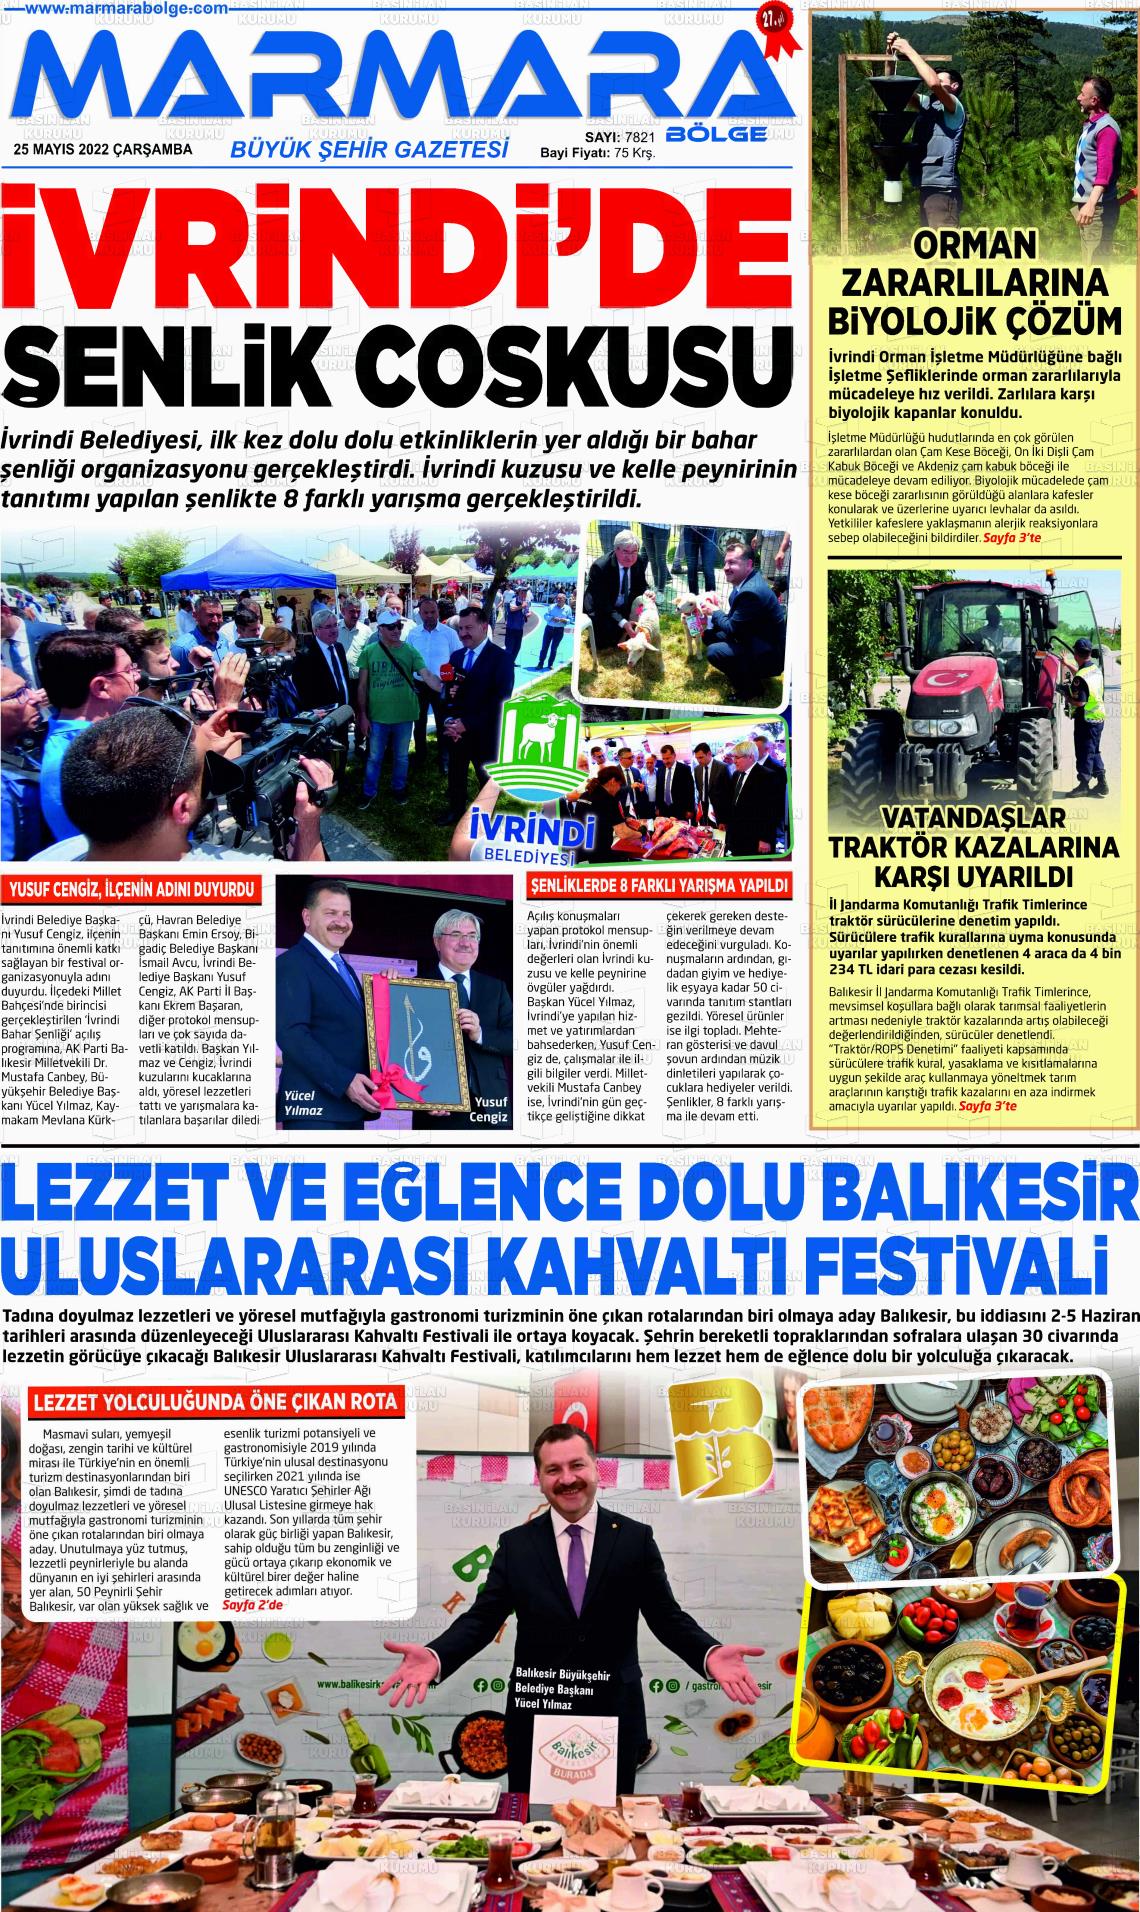 25 mayıs 2022 tarihli marmara bölge gazete manşetleri